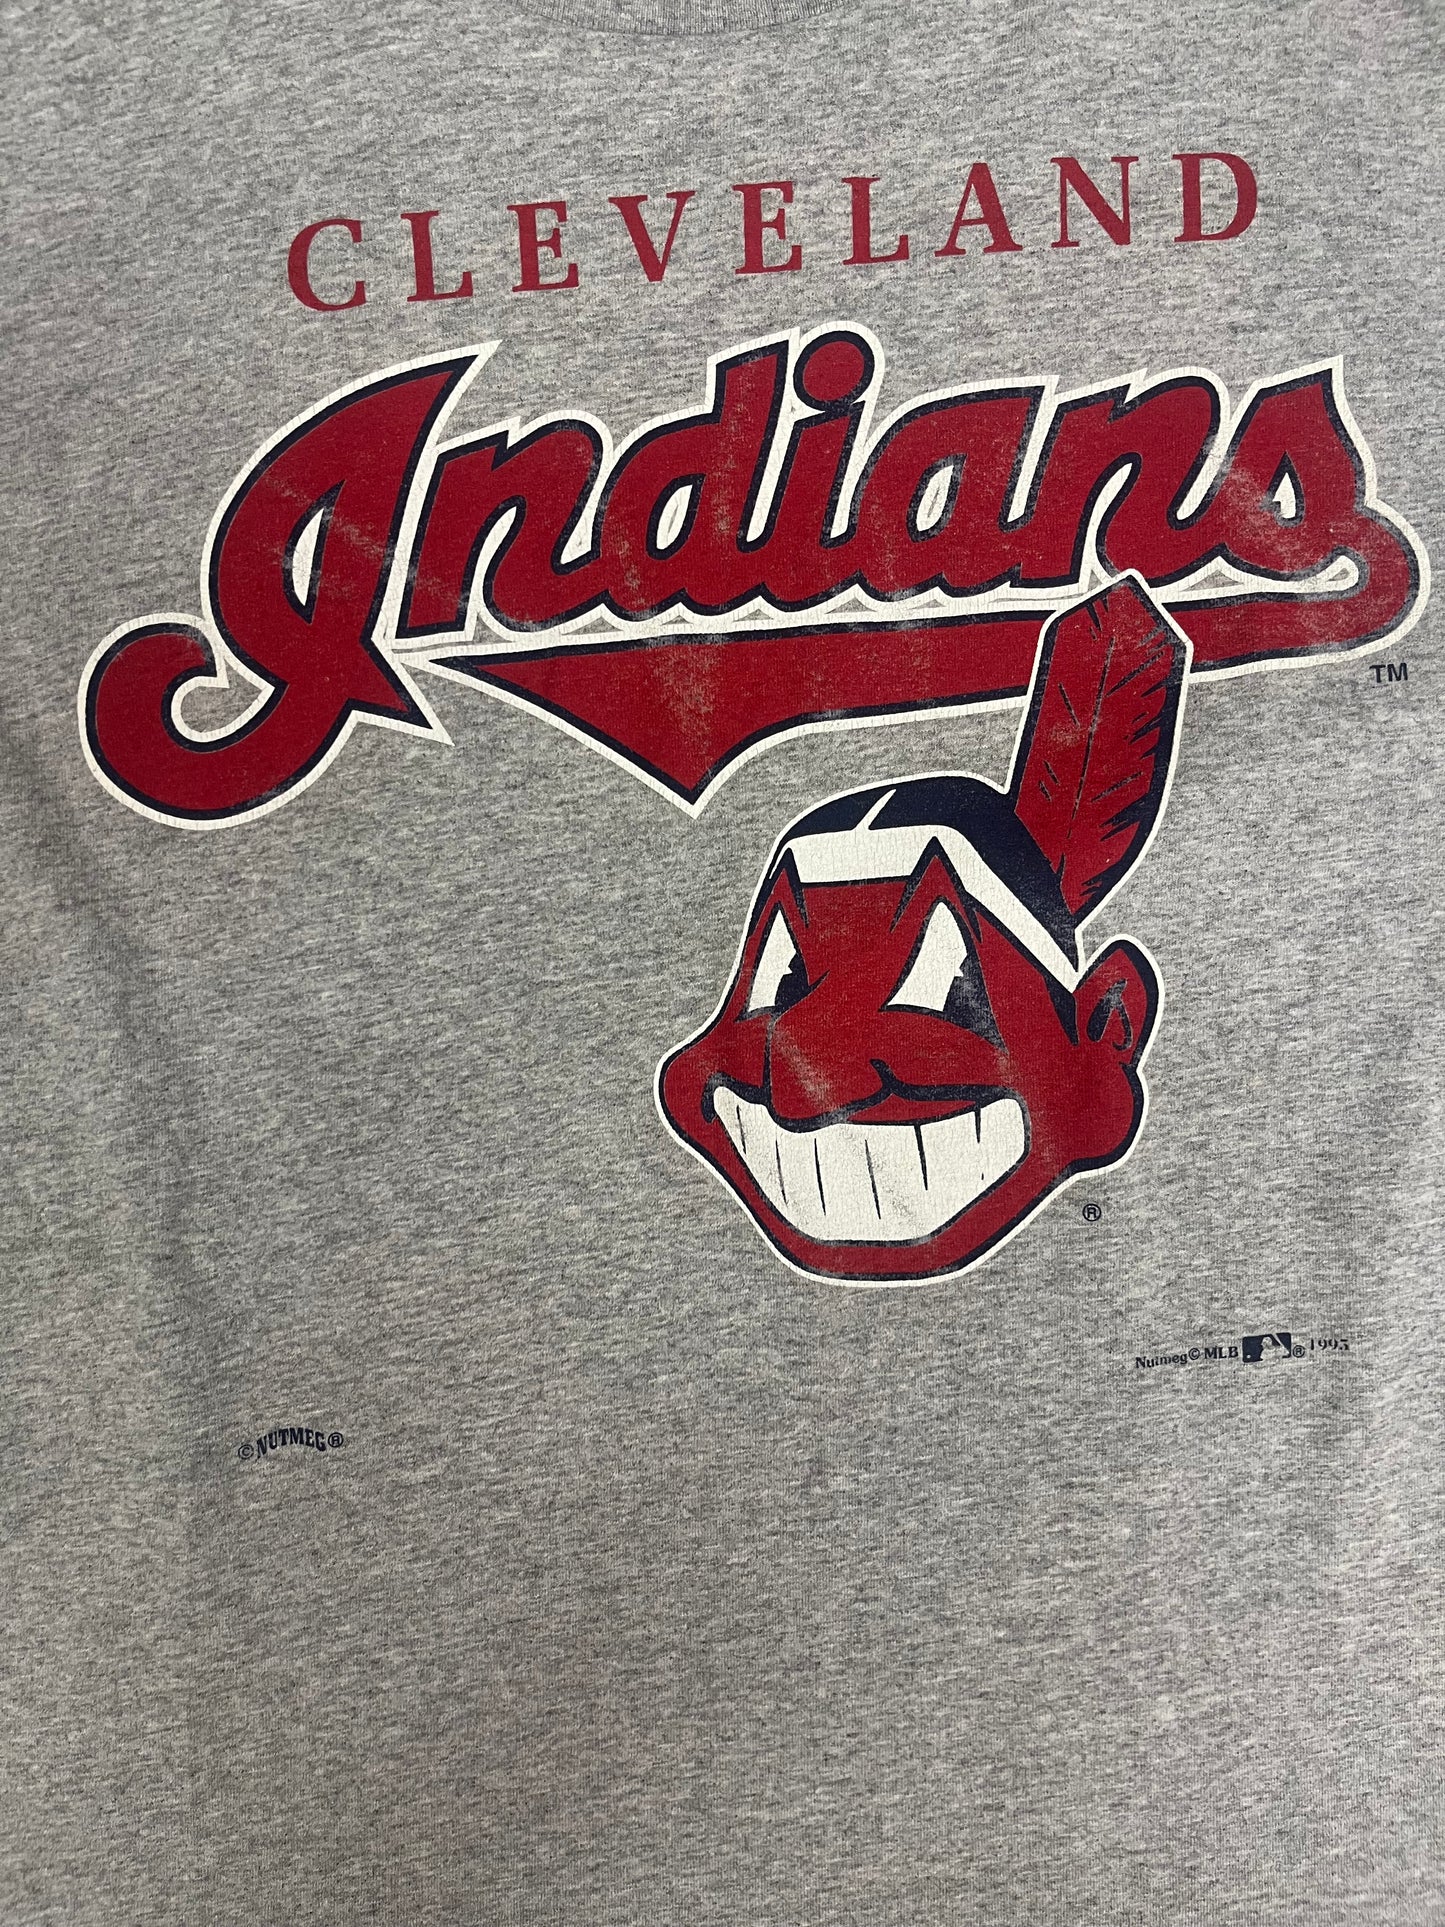 Vintage 1995 Cleveland Indians Tee